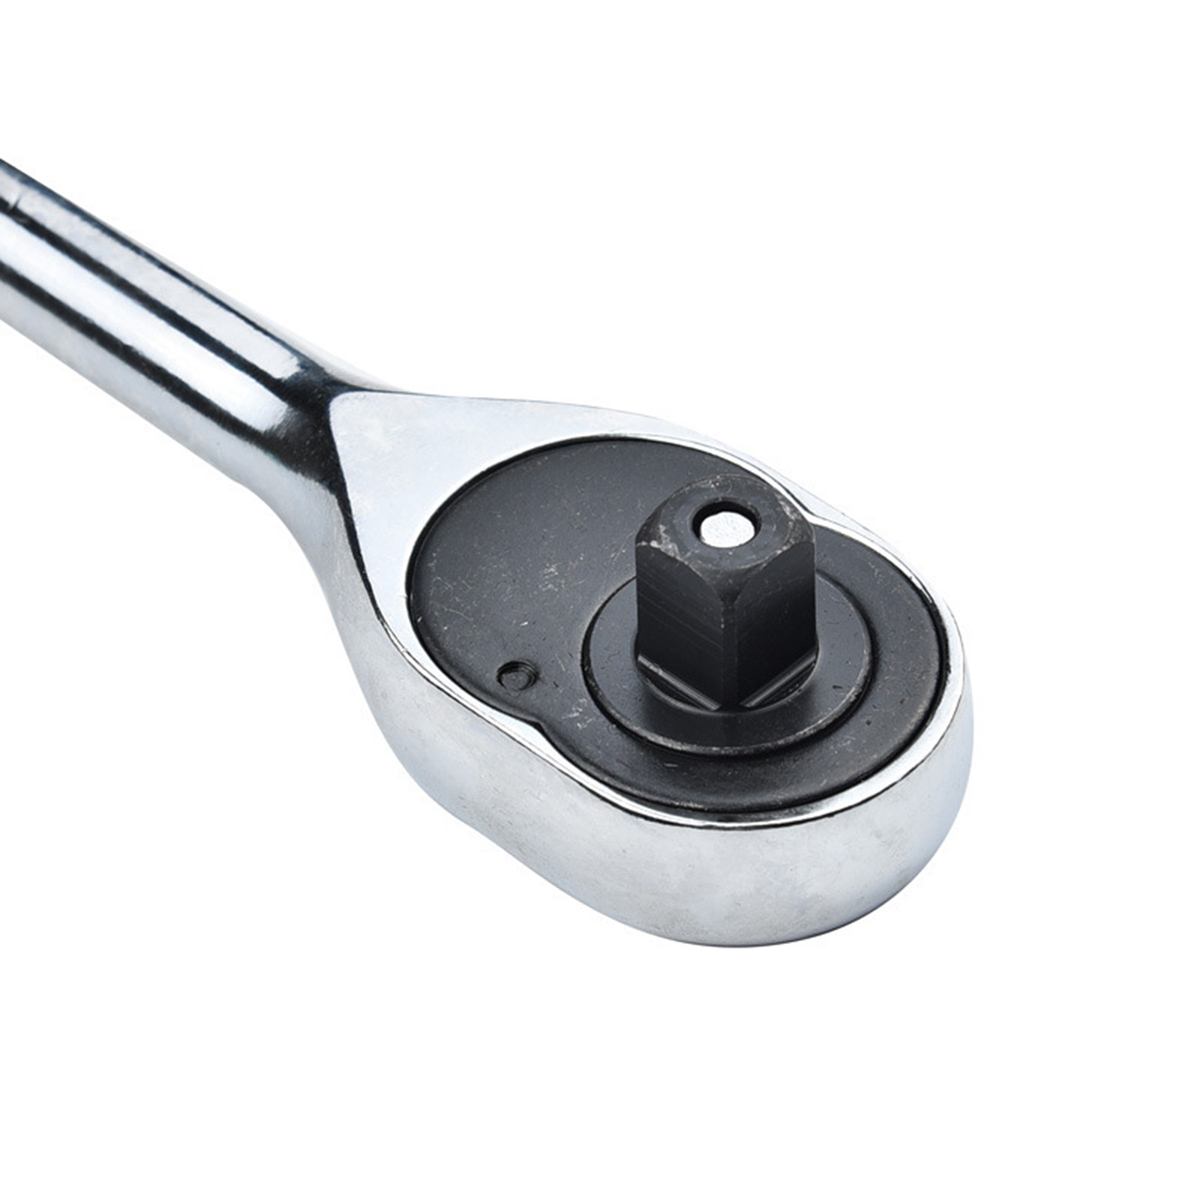 38-Handle-Drive-Socket-Ratchet-Spanner-Wrench-Quick-Release-24-Teeth-Repair-Tool-1387512-10